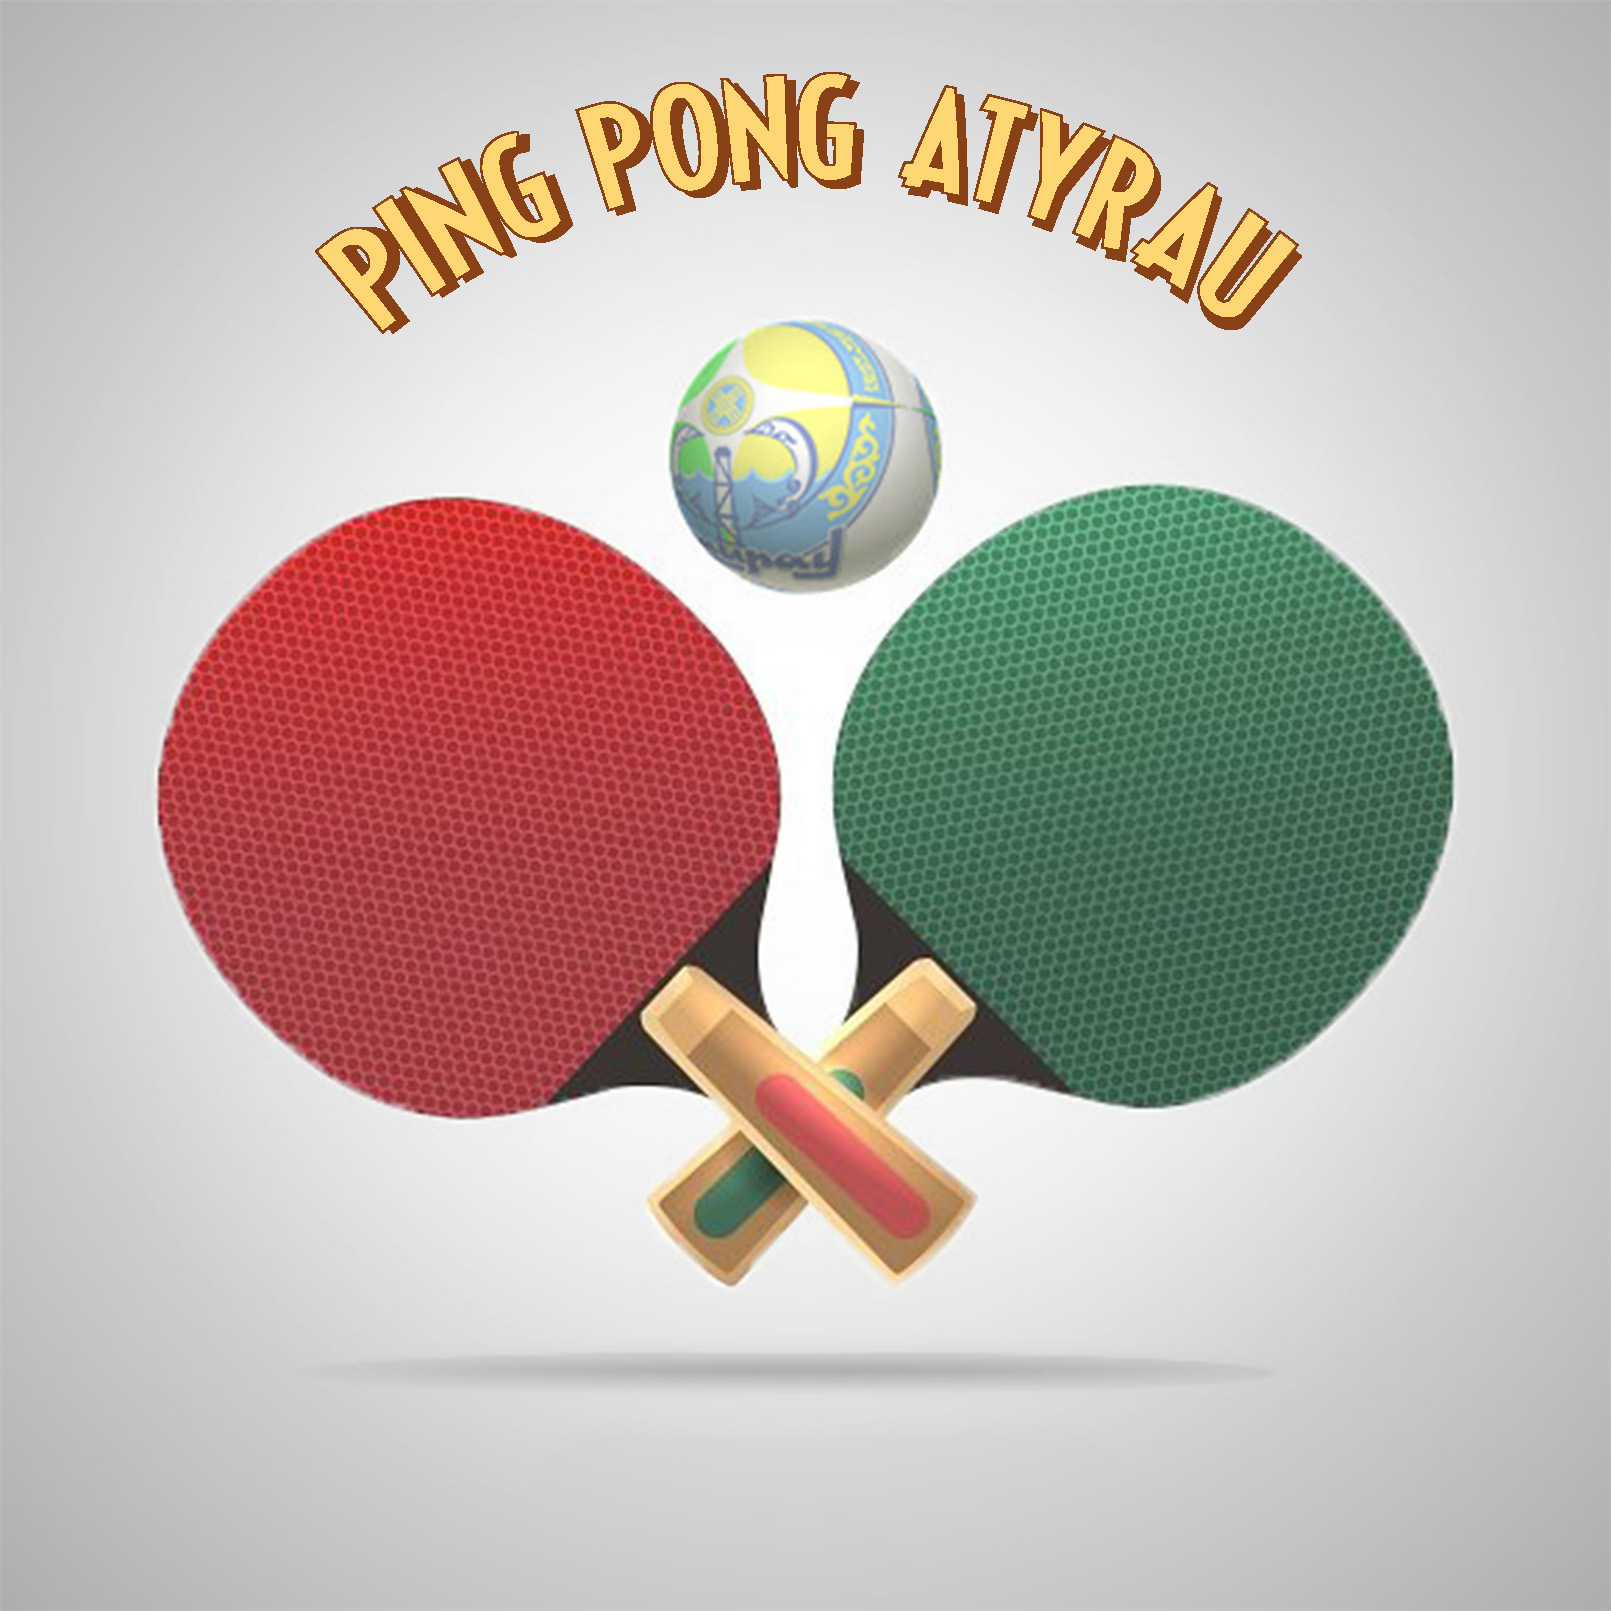 "Ping Pong" - клуб настольного тенниса